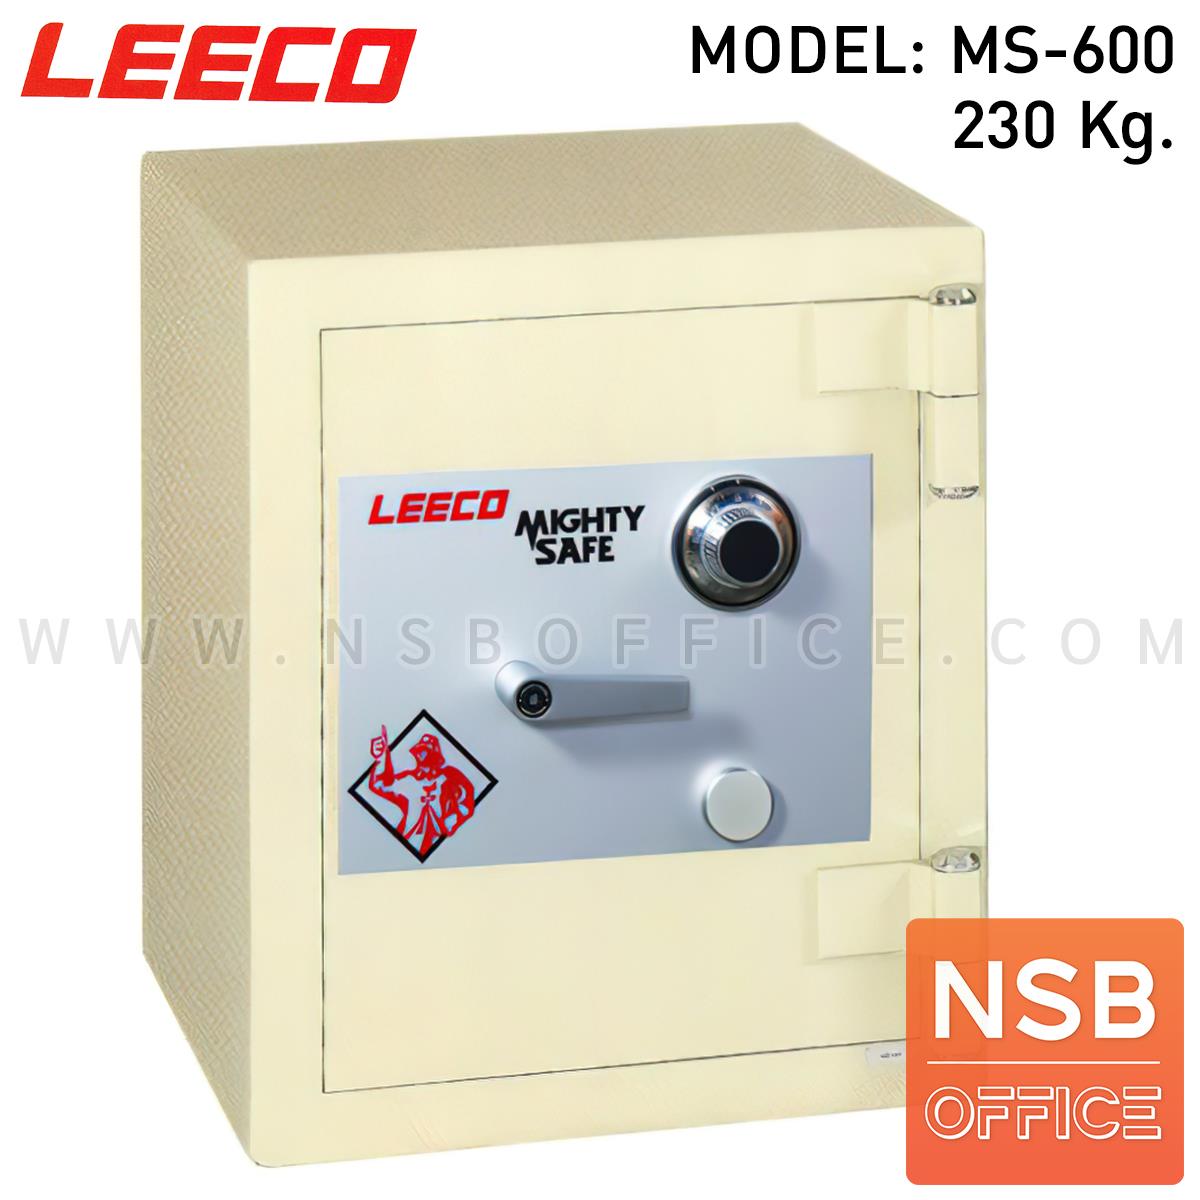 F02A017:ตู้เซฟนิรภัย 230 กก. ลีโก้ รุ่น LEECO-MS-600 มี 1 กุญแจ 1 รหัส (เปลี่ยนรหัสไม่ได้)   